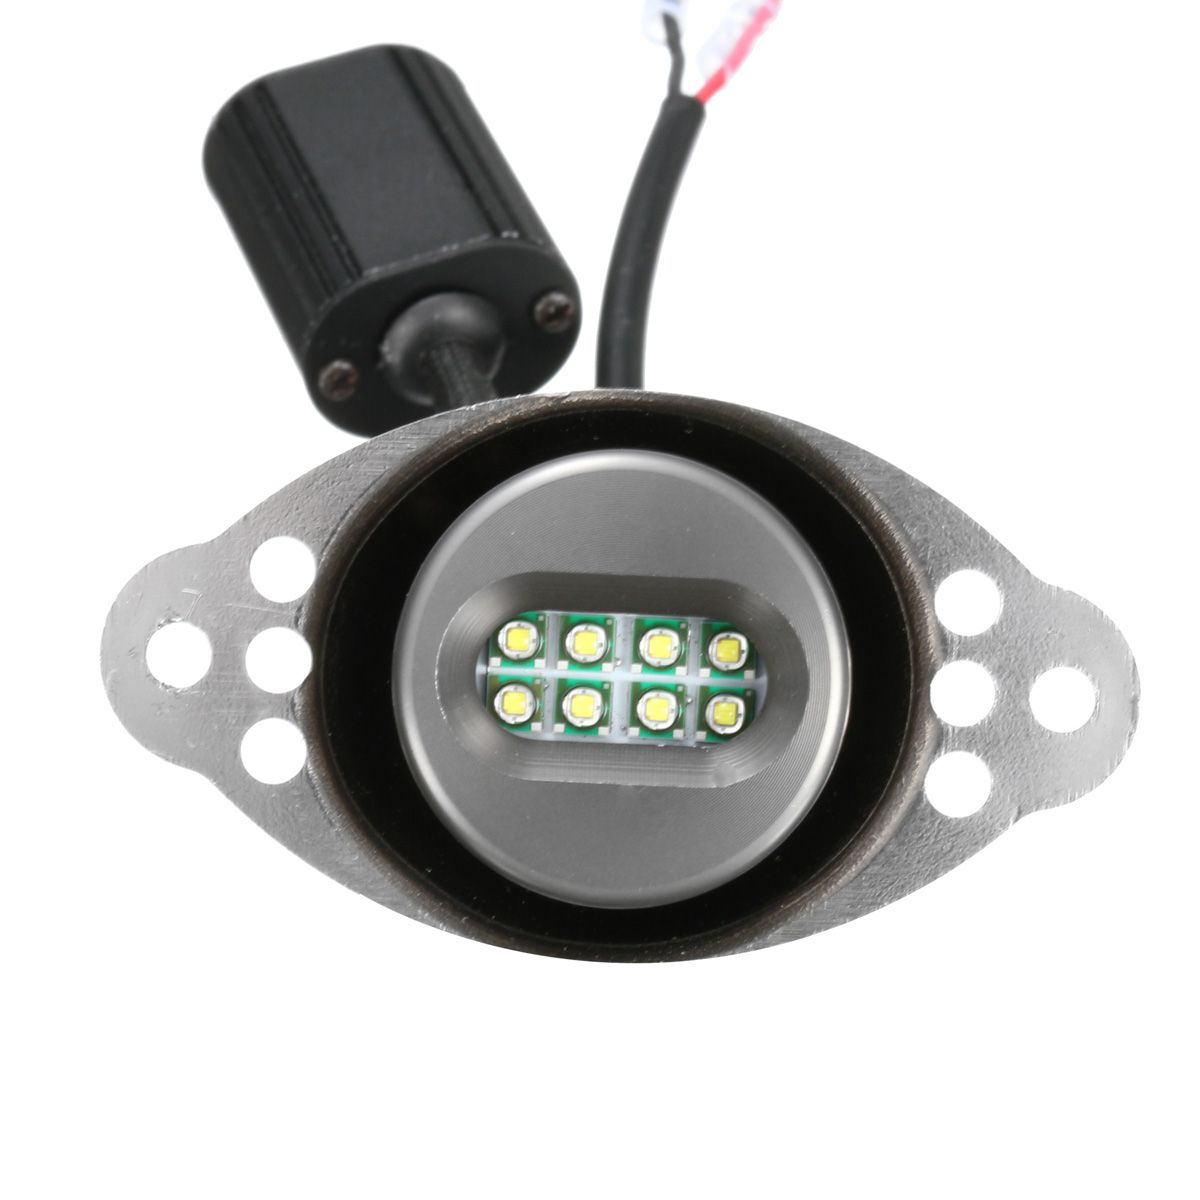 80W-LED-Angel-Eye-Halo-Ring-Headlight-Bulbs-For-BMW-E90-E91-LCI-2009-2011-1093025